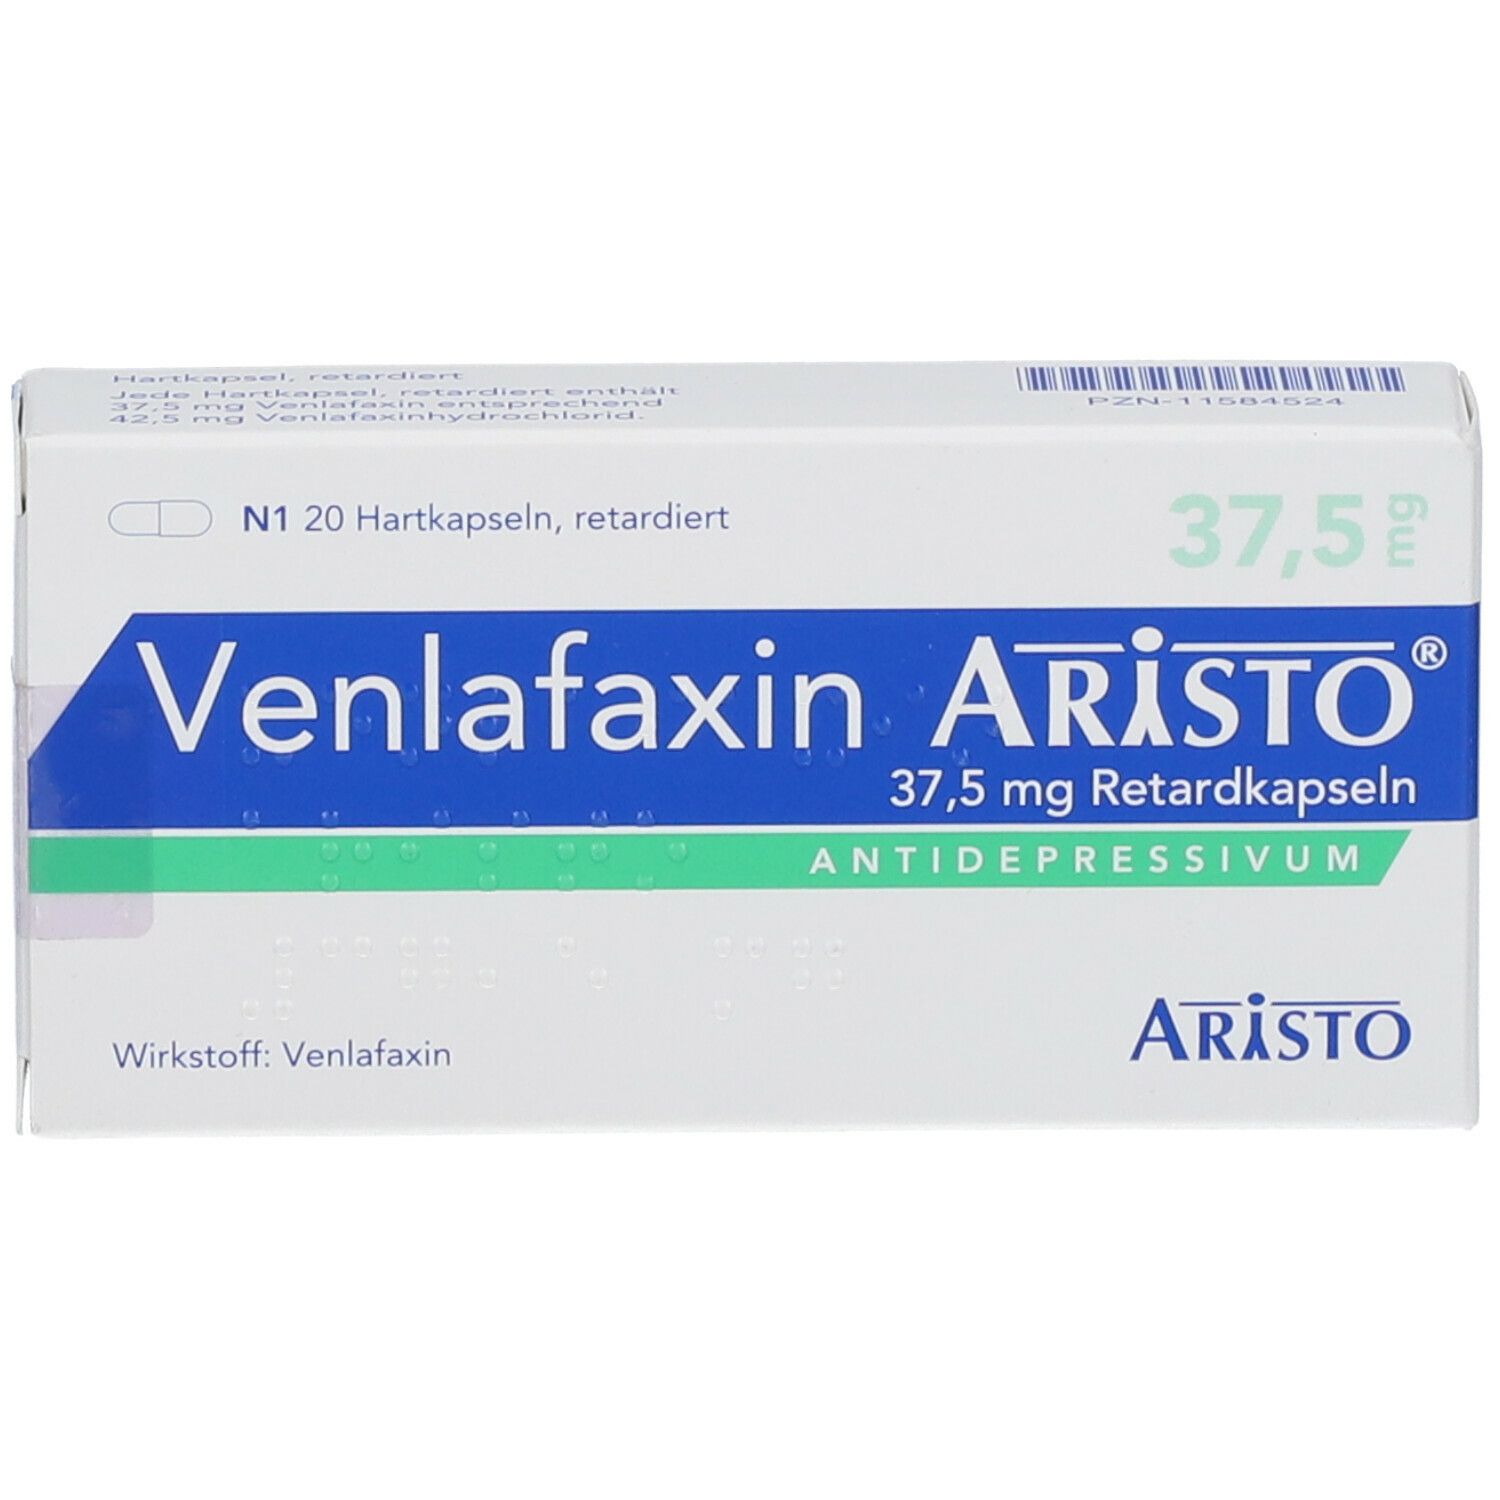 Venlafaxin Aristo® 37,5 mg